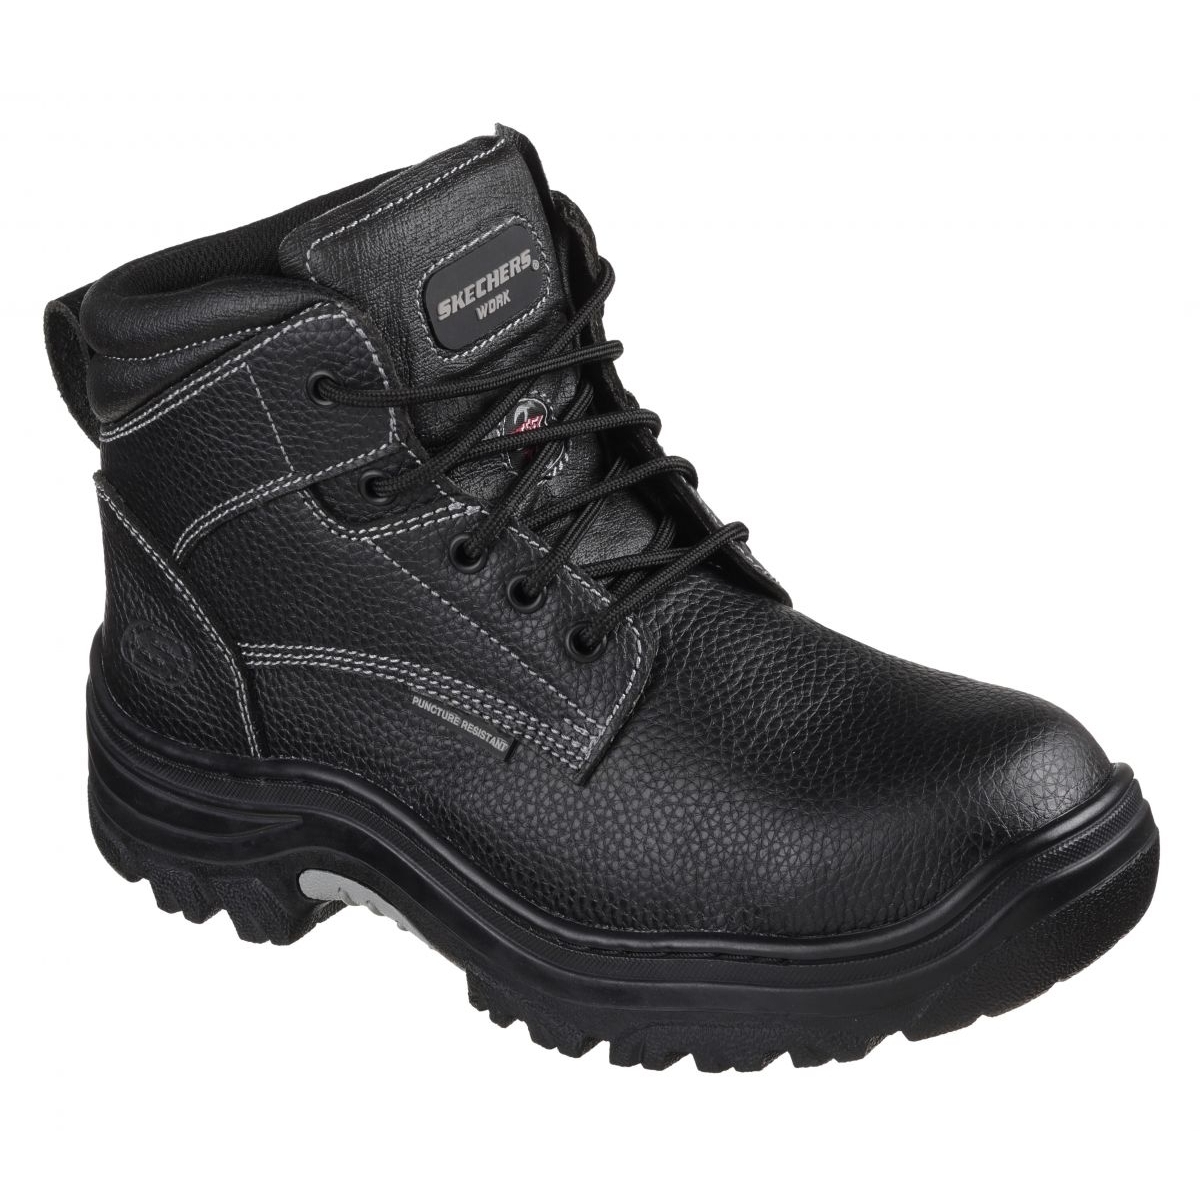 Skechers Men's Burgin-Tarlac Industrial Boot Varies BLACK - BLACK, 14